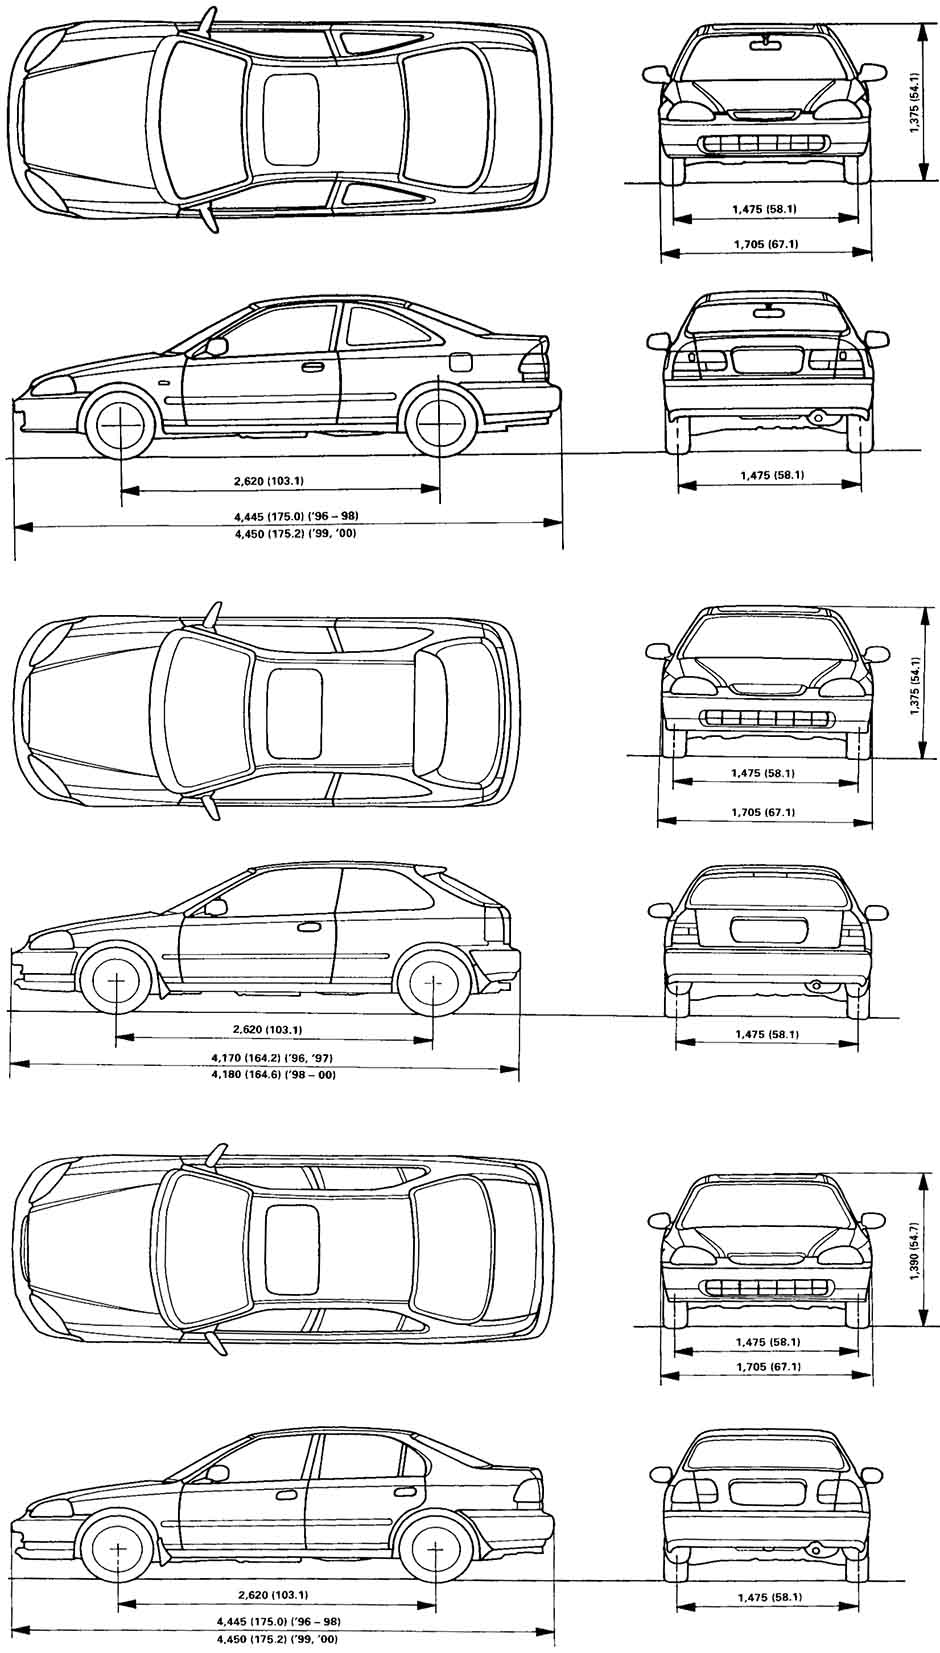 Габаритные размеры Хонда Сивик 1996-2000 (dimensions Honda Civic mk6)